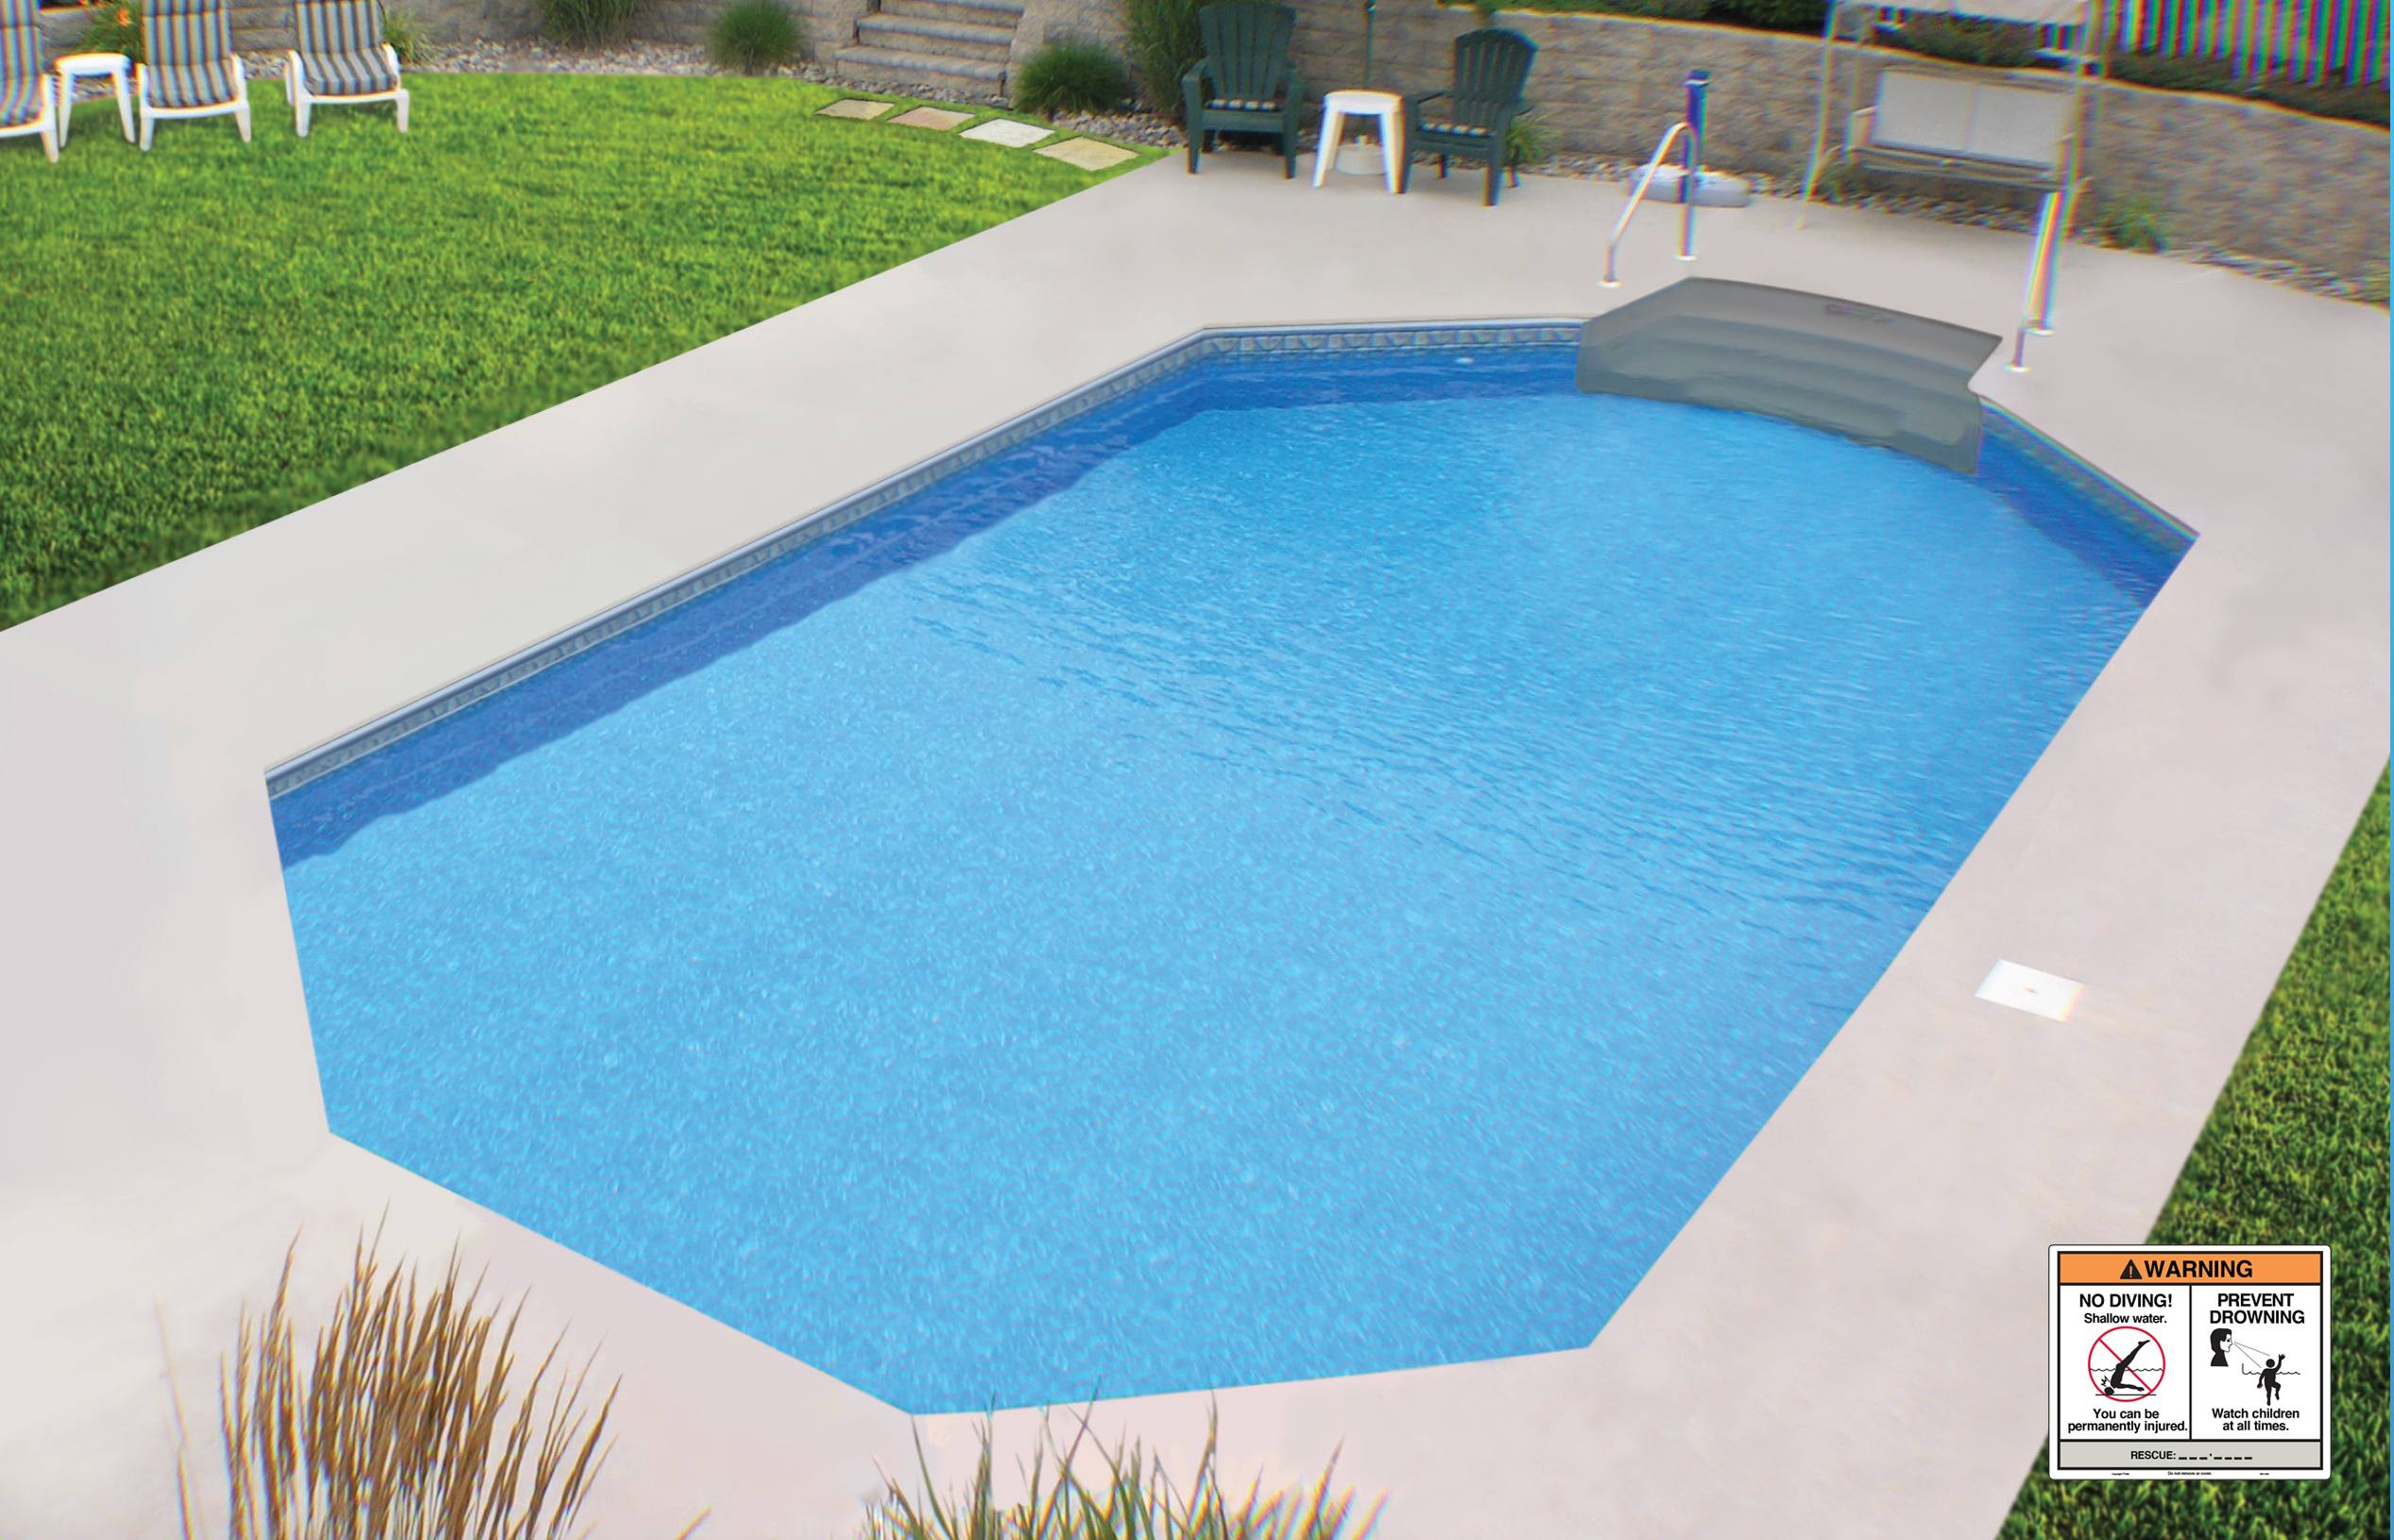 A doughboy pool installed as an inground pool or "semi-inground pool"